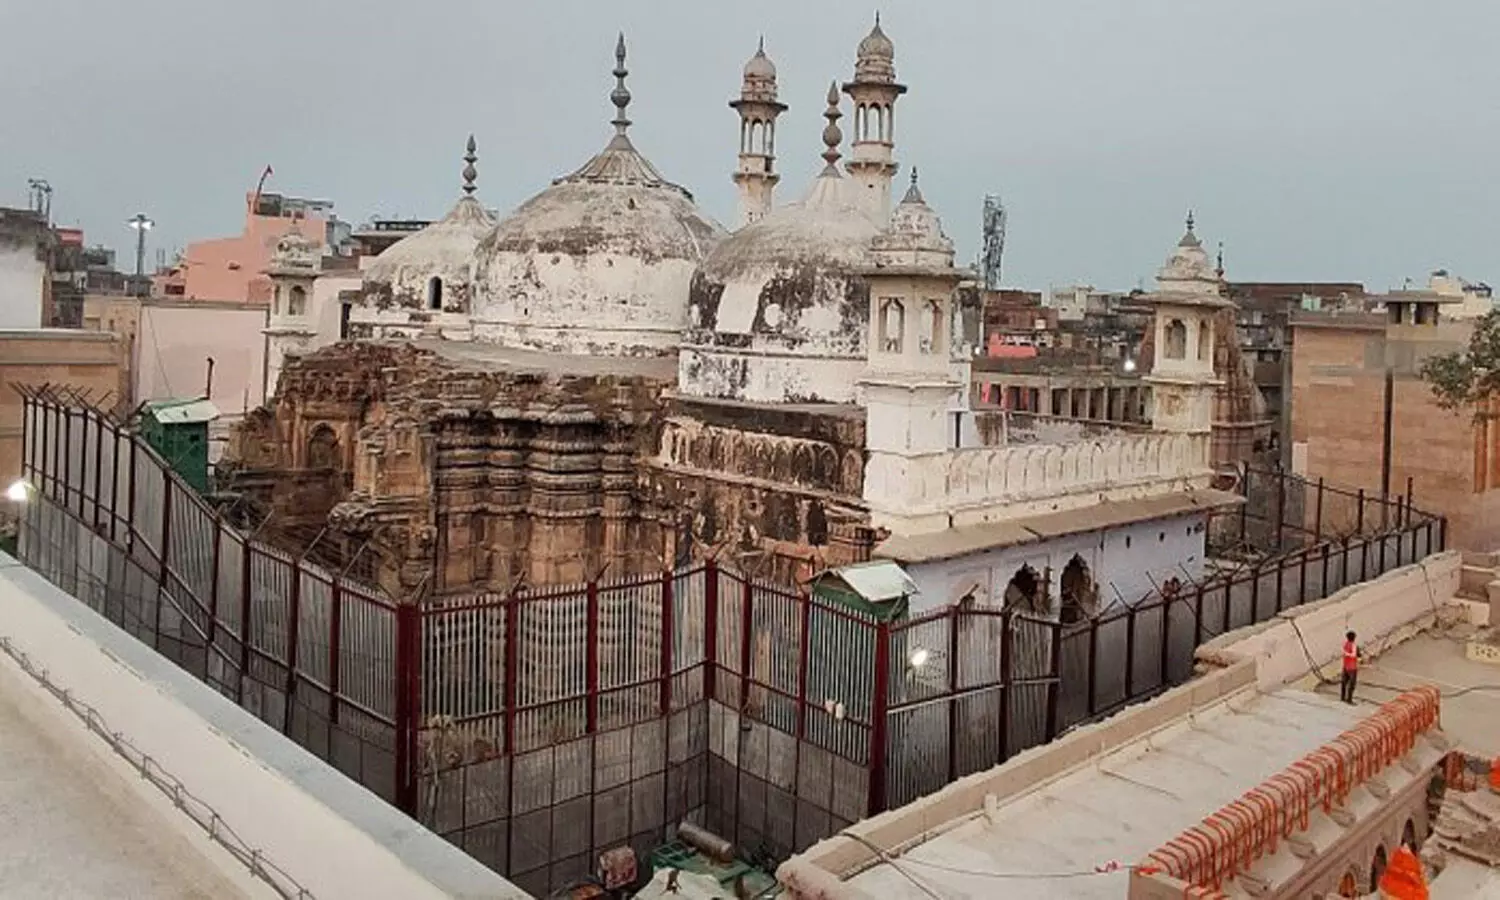 Gyanvapi mosque case: Varanasi court completes hearing, reserves decision